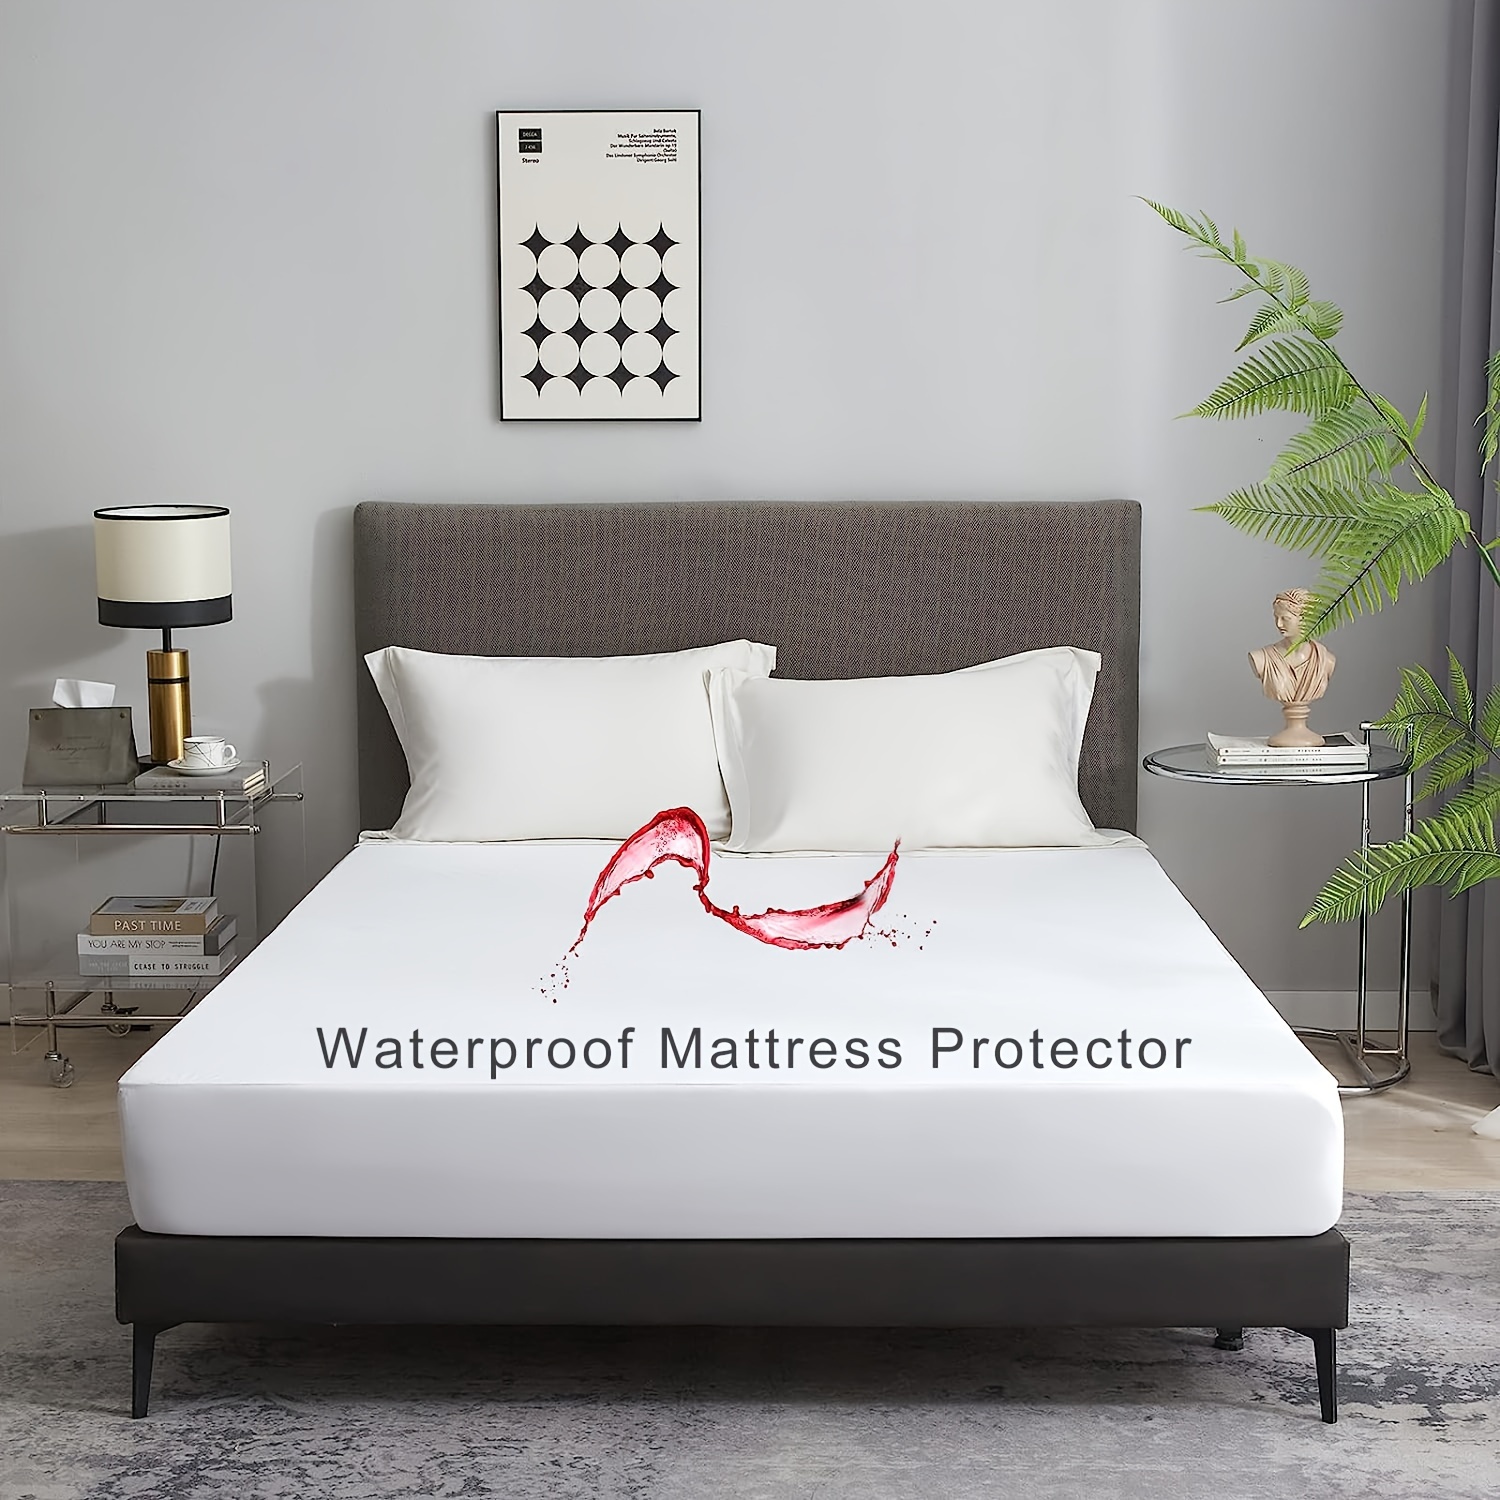 Waterproof Mattress Protector, Cooling Mattress Cover